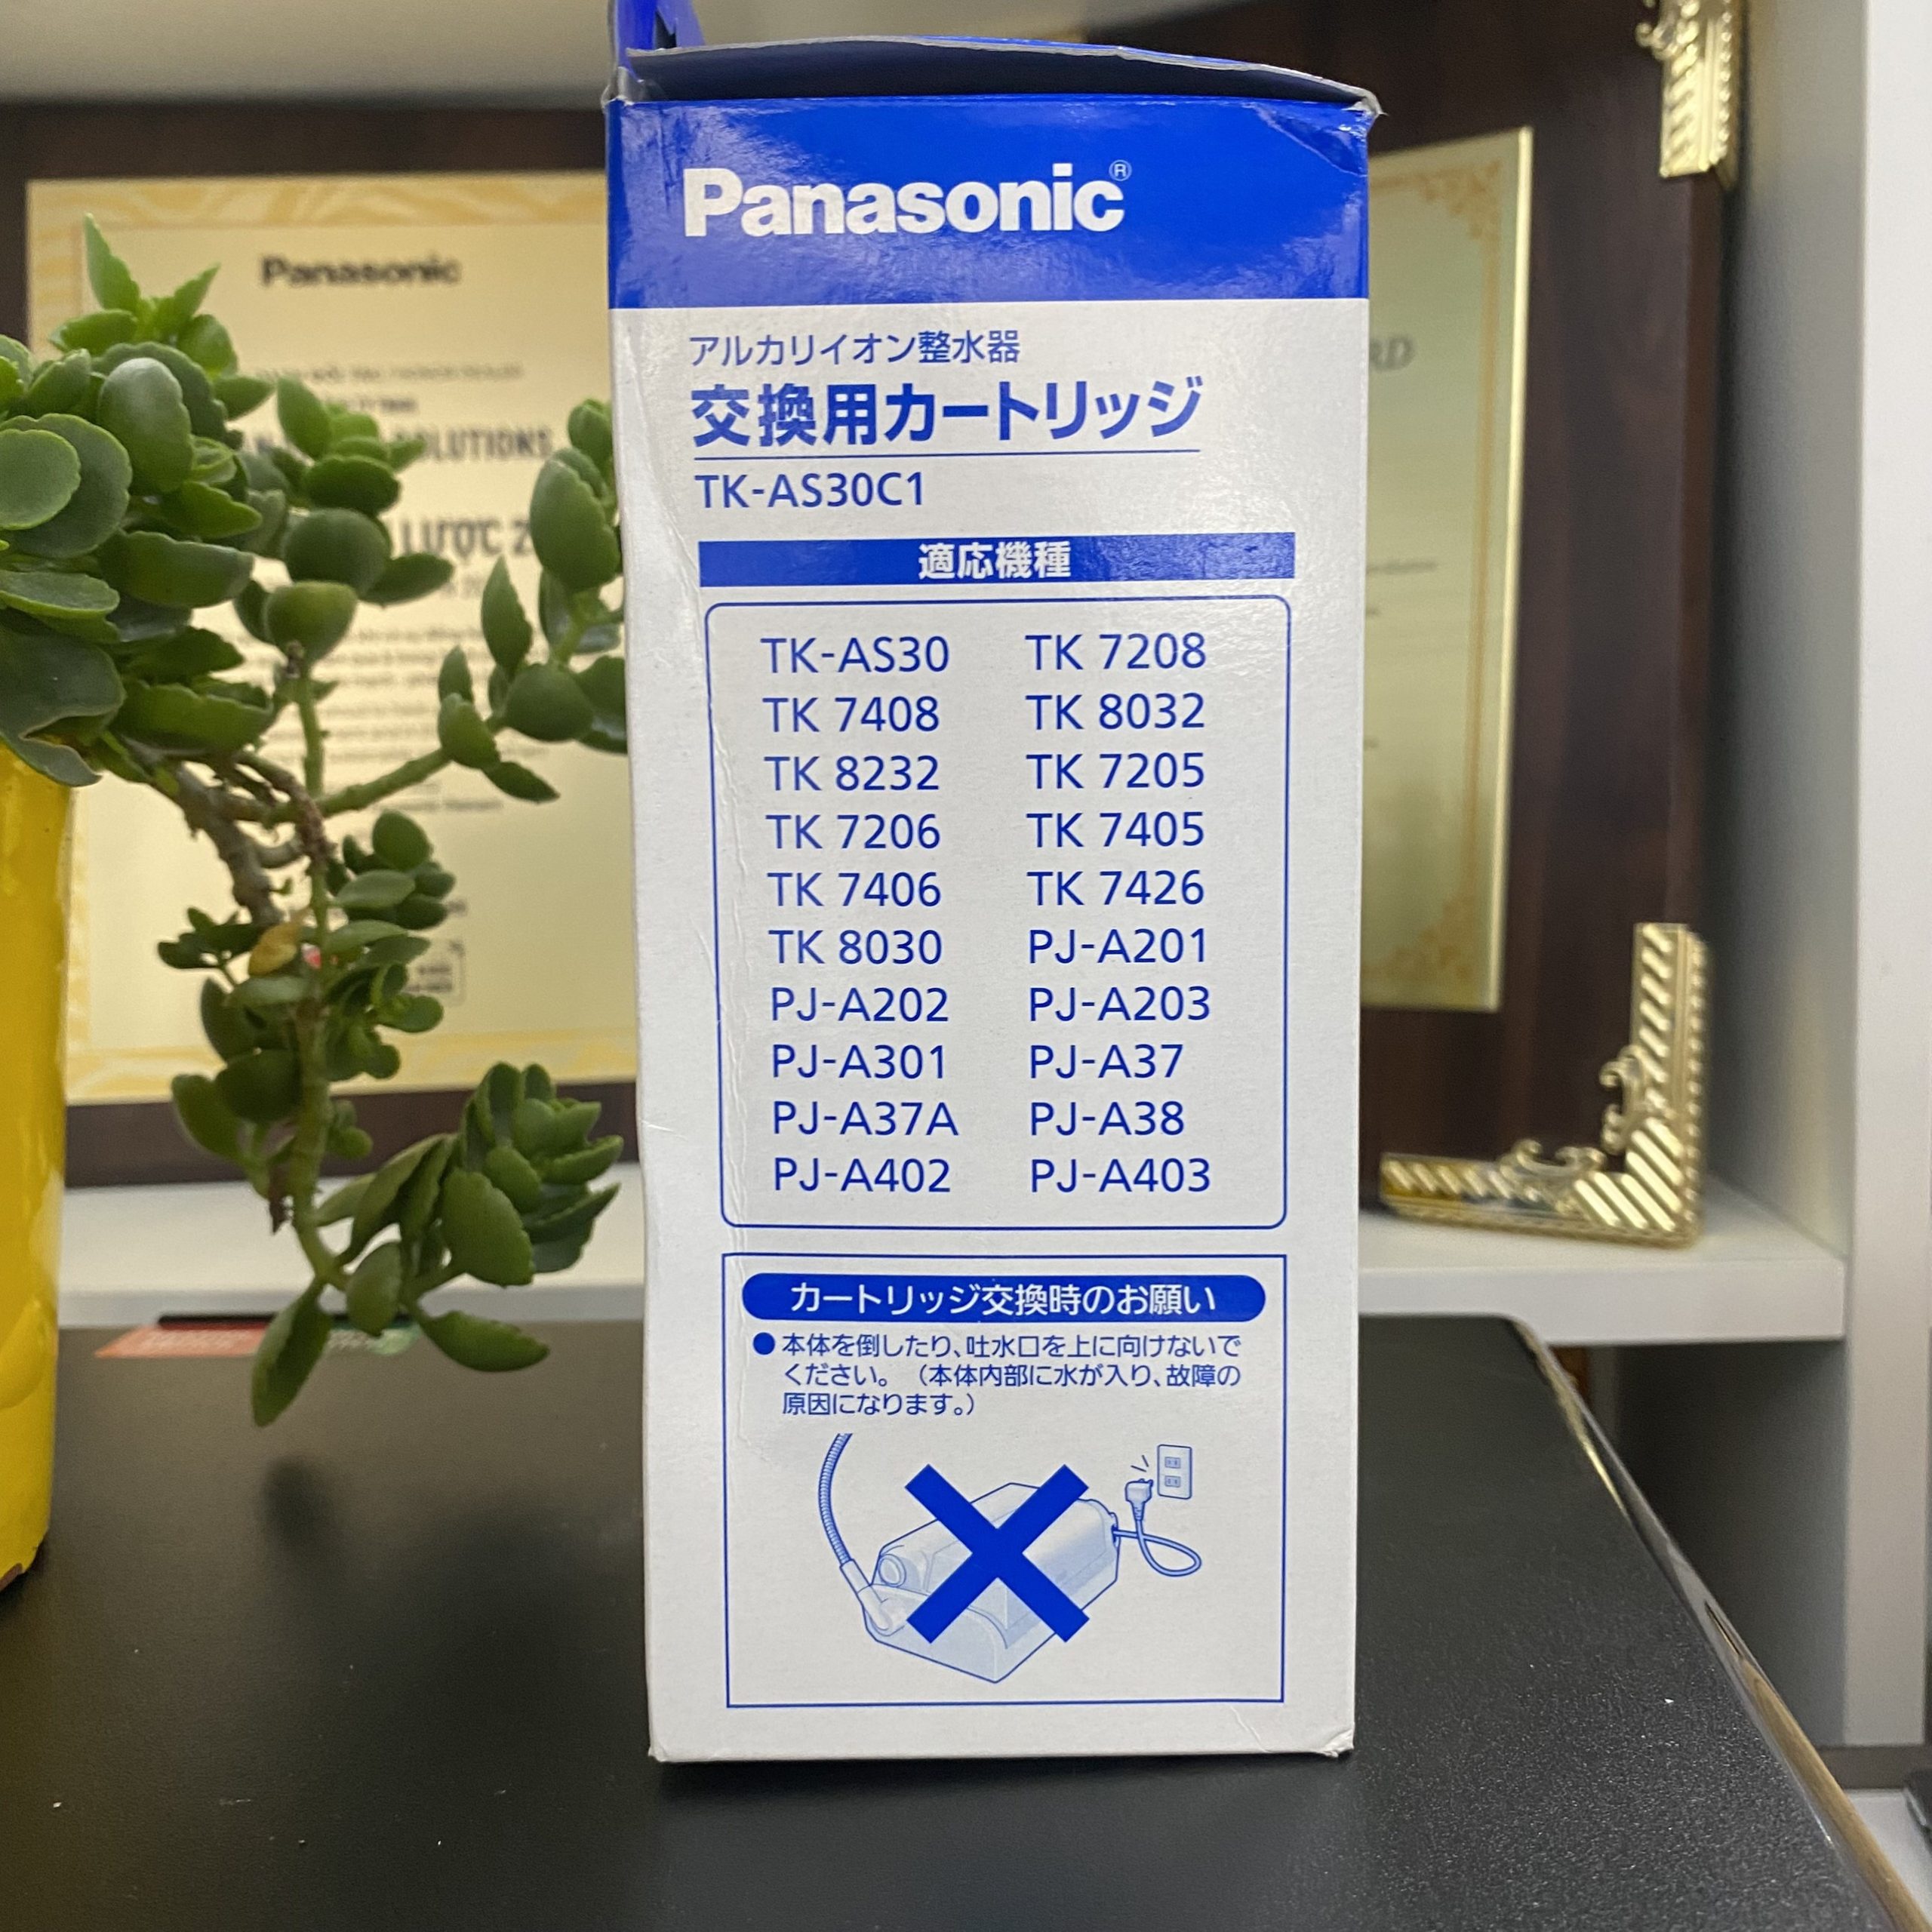 Lõi Lọc Tinh Panasonic TK-AS30C1